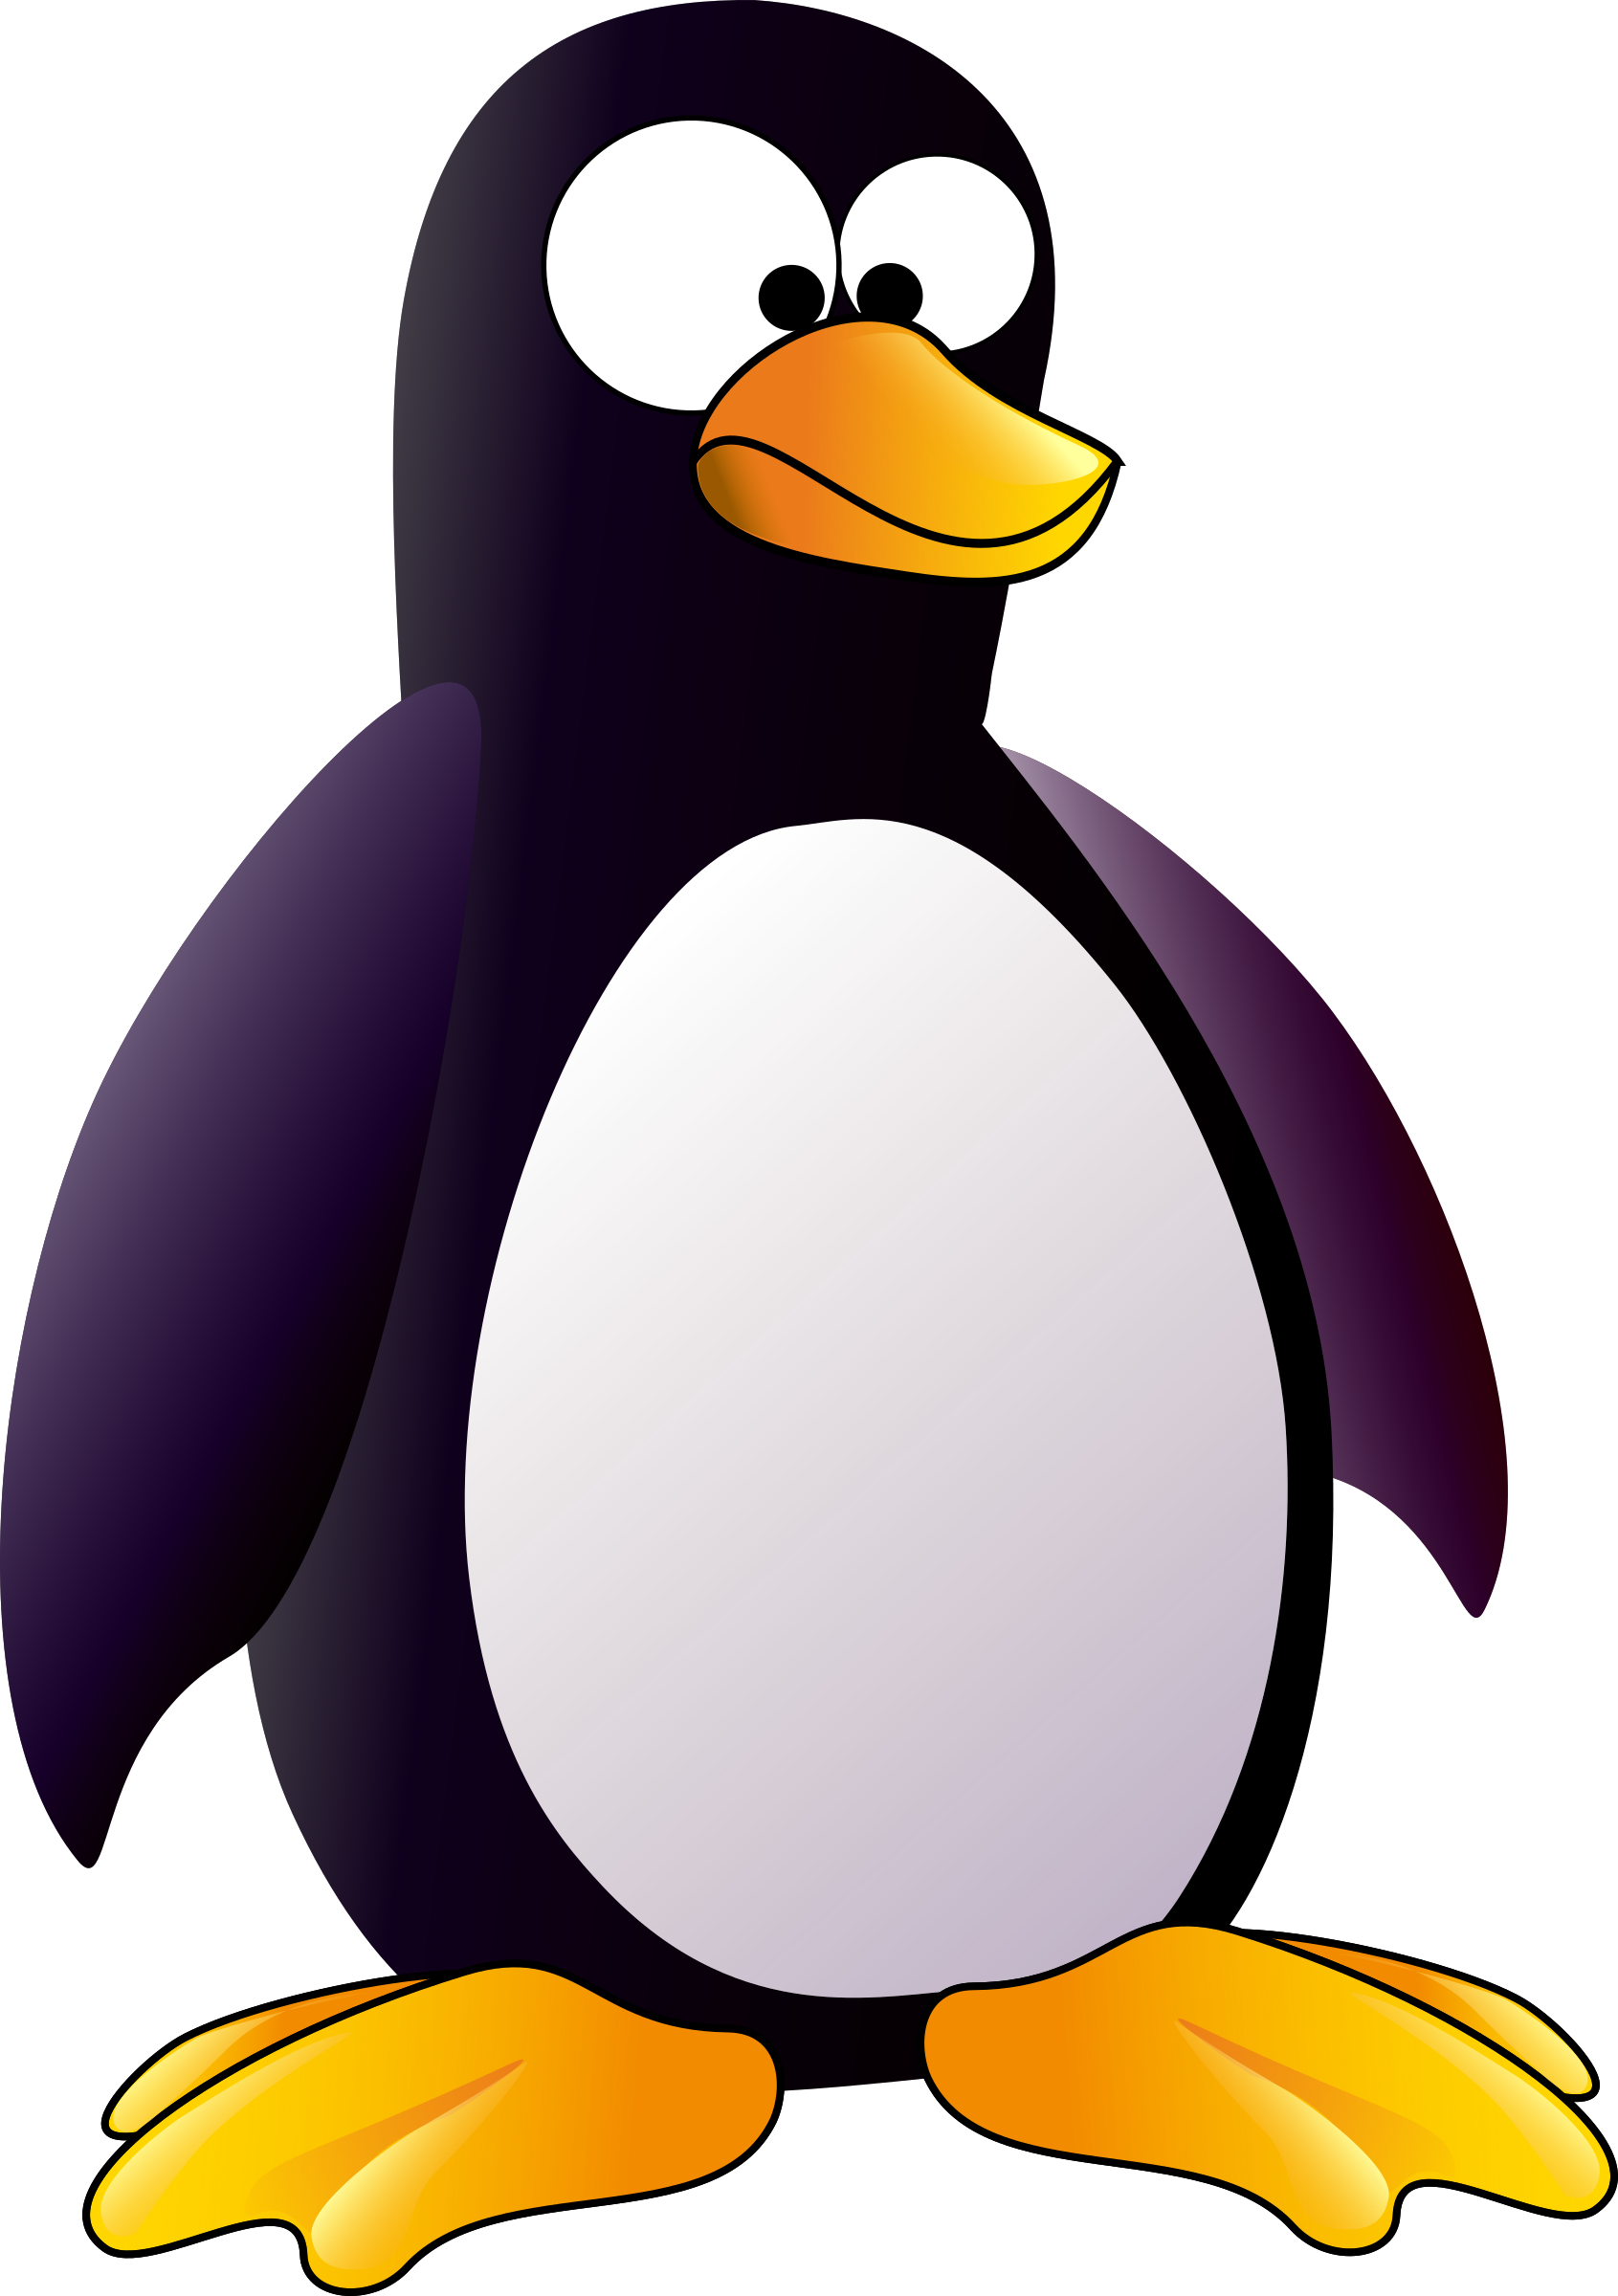 Linux Logo PNG Images Transparent Free Download | PNGMart